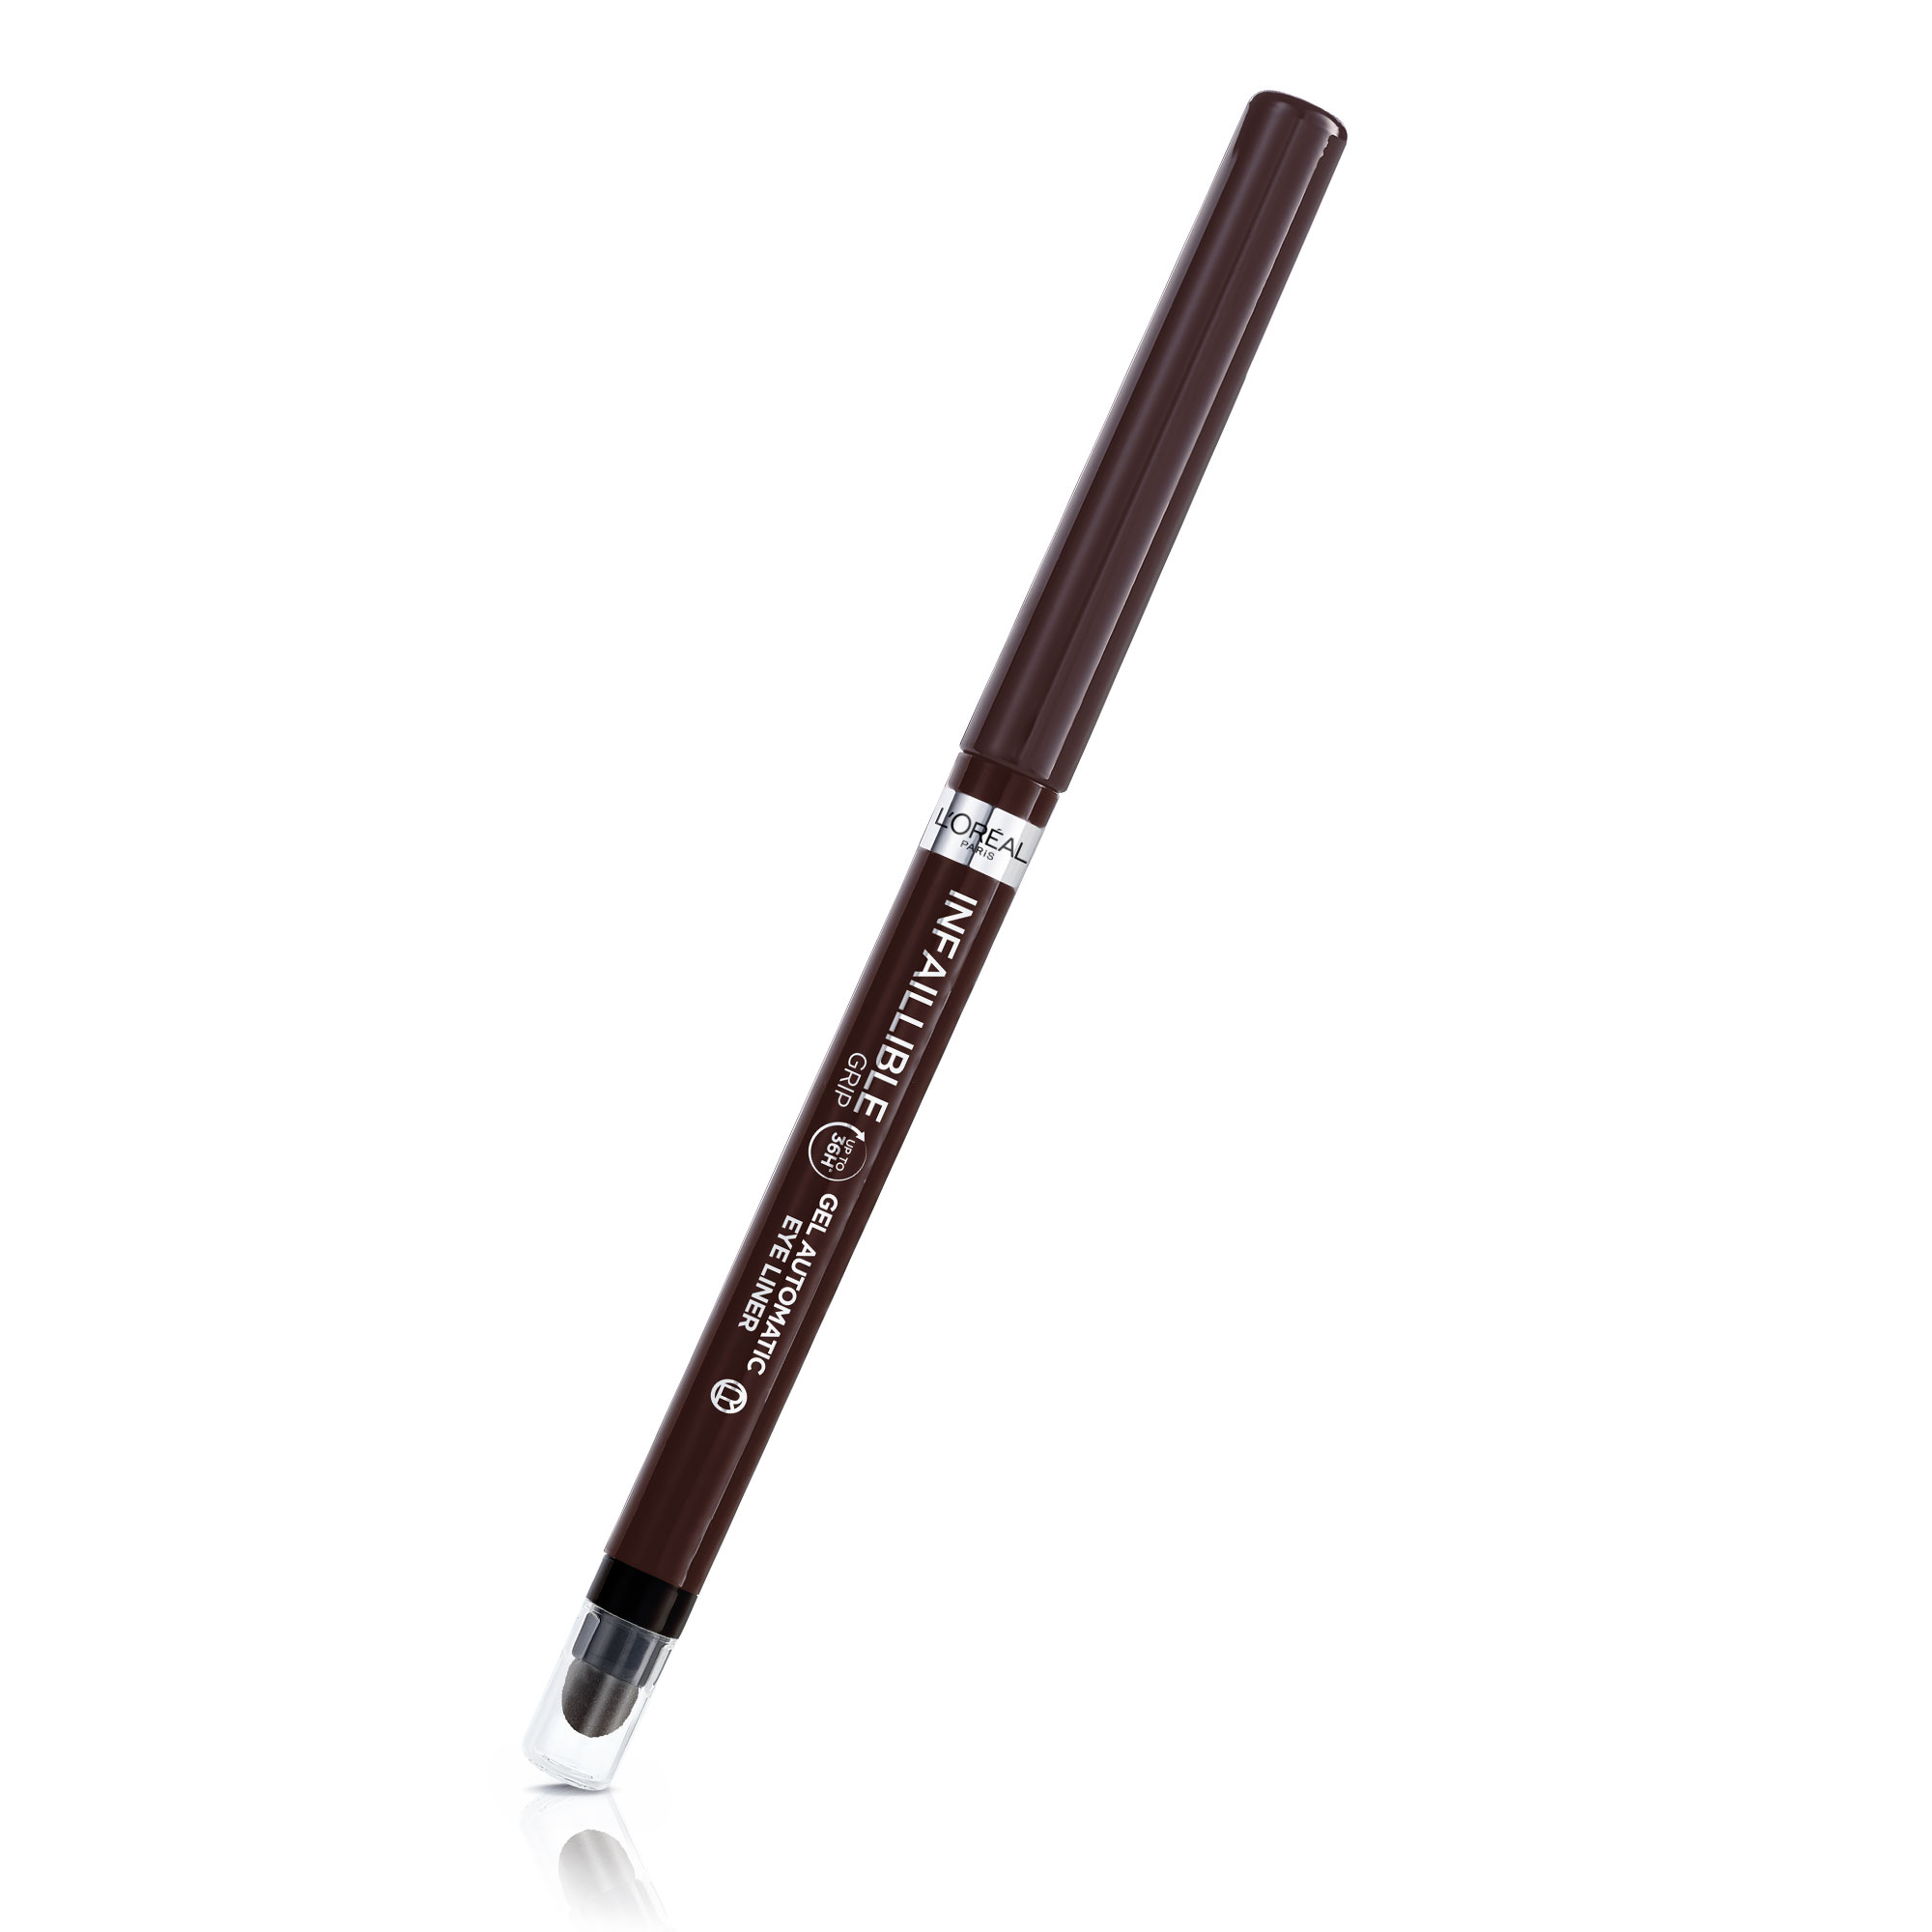 Creion mecanic pentru ochi tip gel Infaillible 36H Grip, Brown Denim, 1.2 g, Loreal Paris